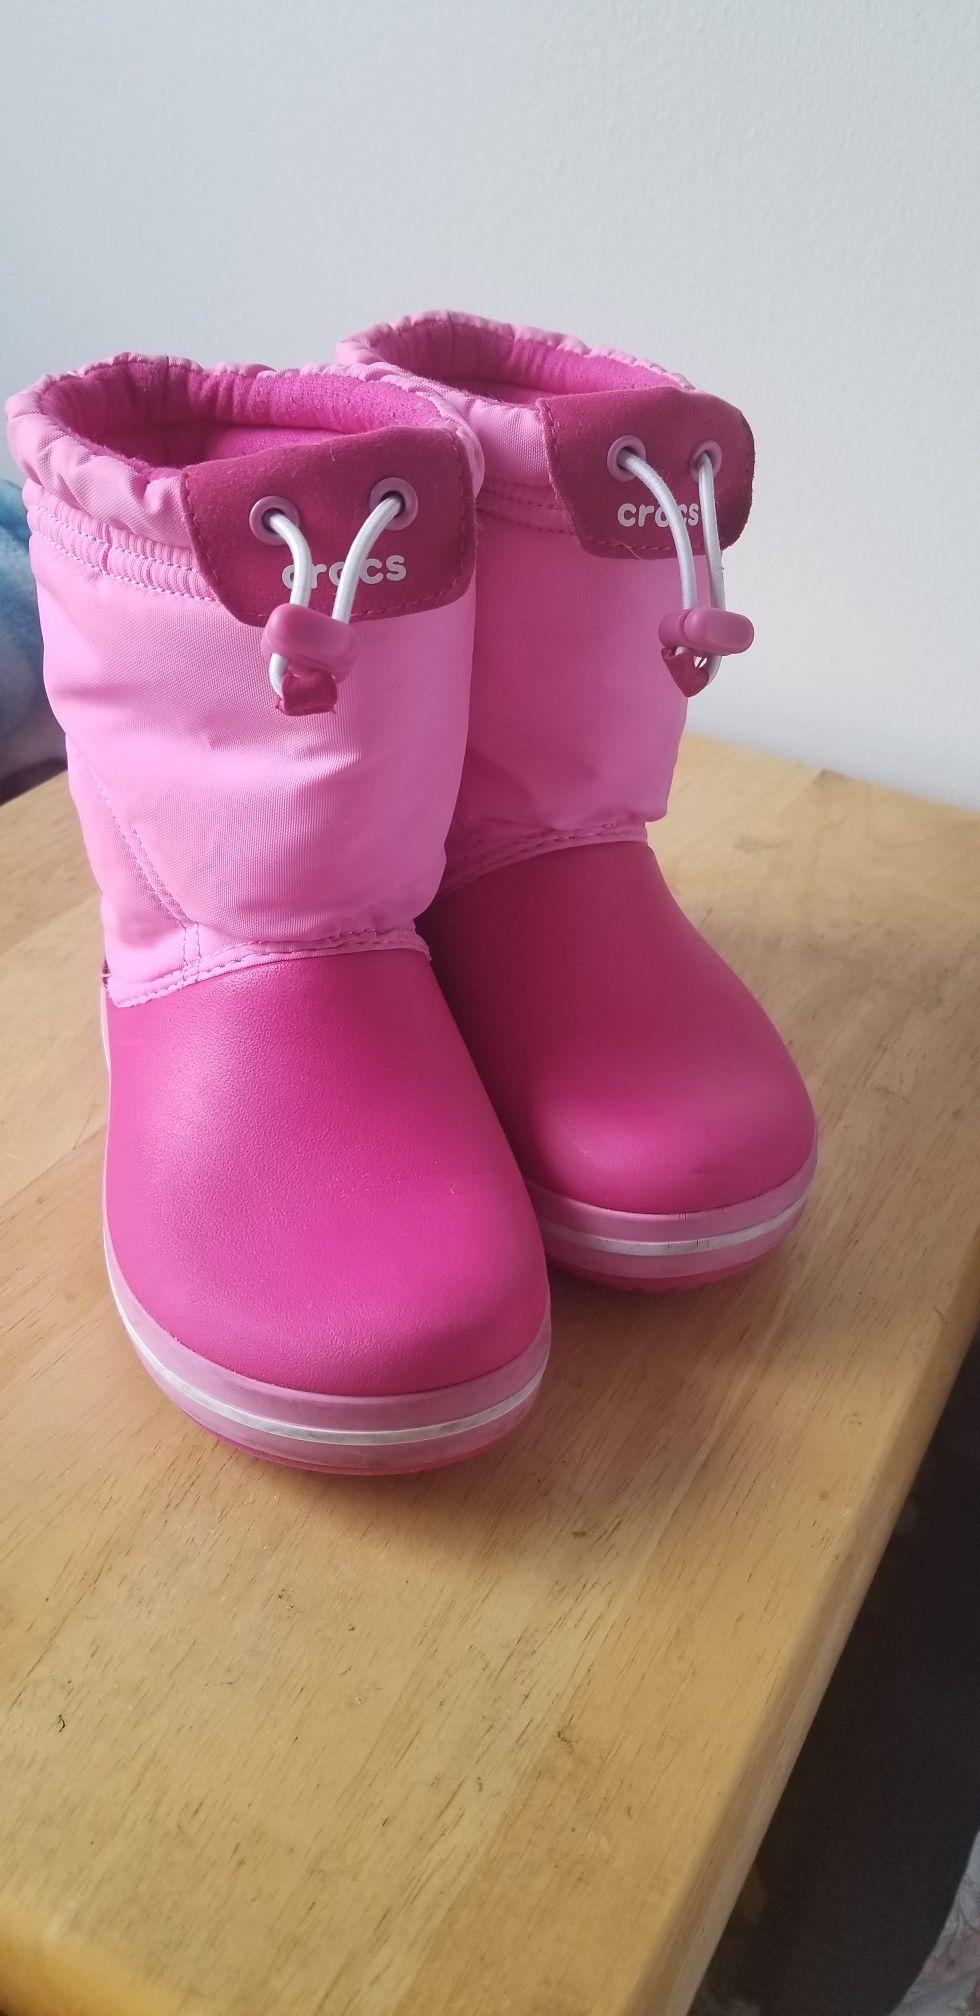 Girl Croc's rain/snow boots